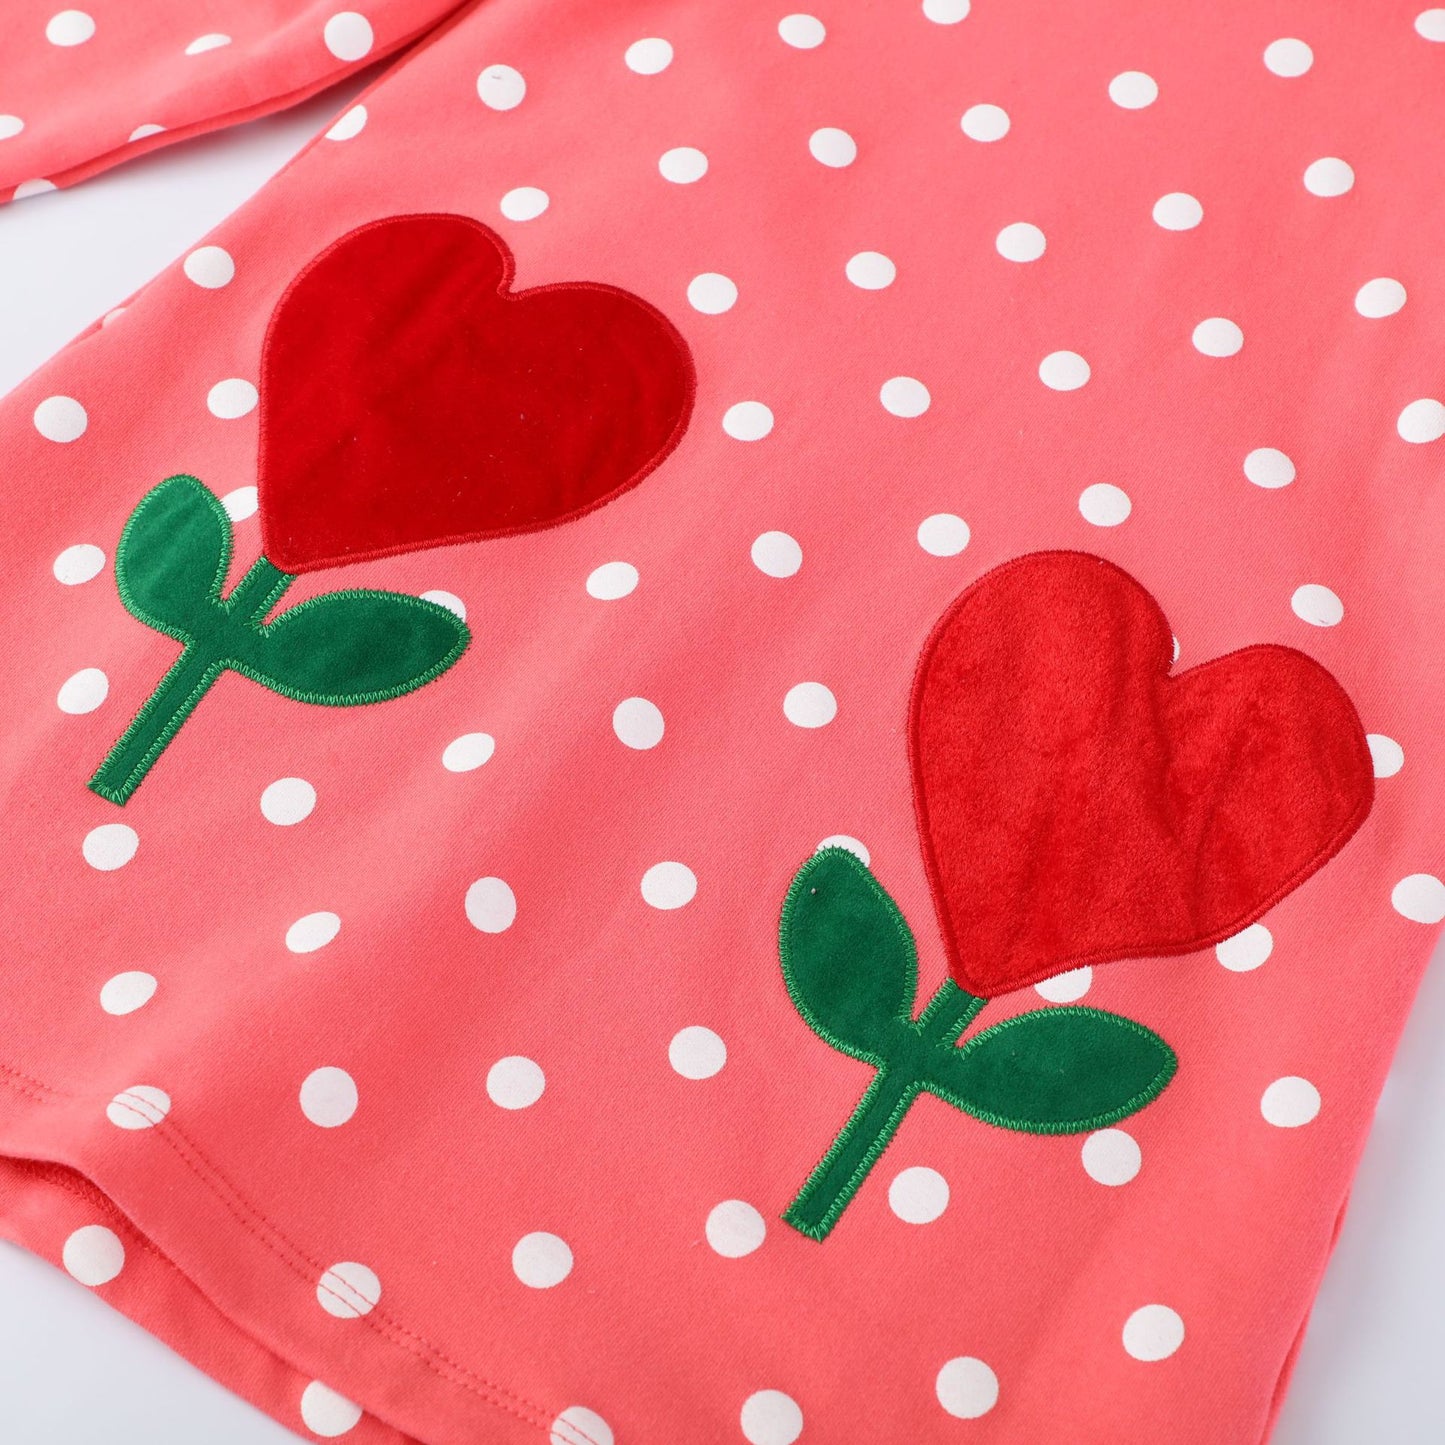 Polkadot heart shape flower girl dress (Low in stock / 4,6&7 yrs old)